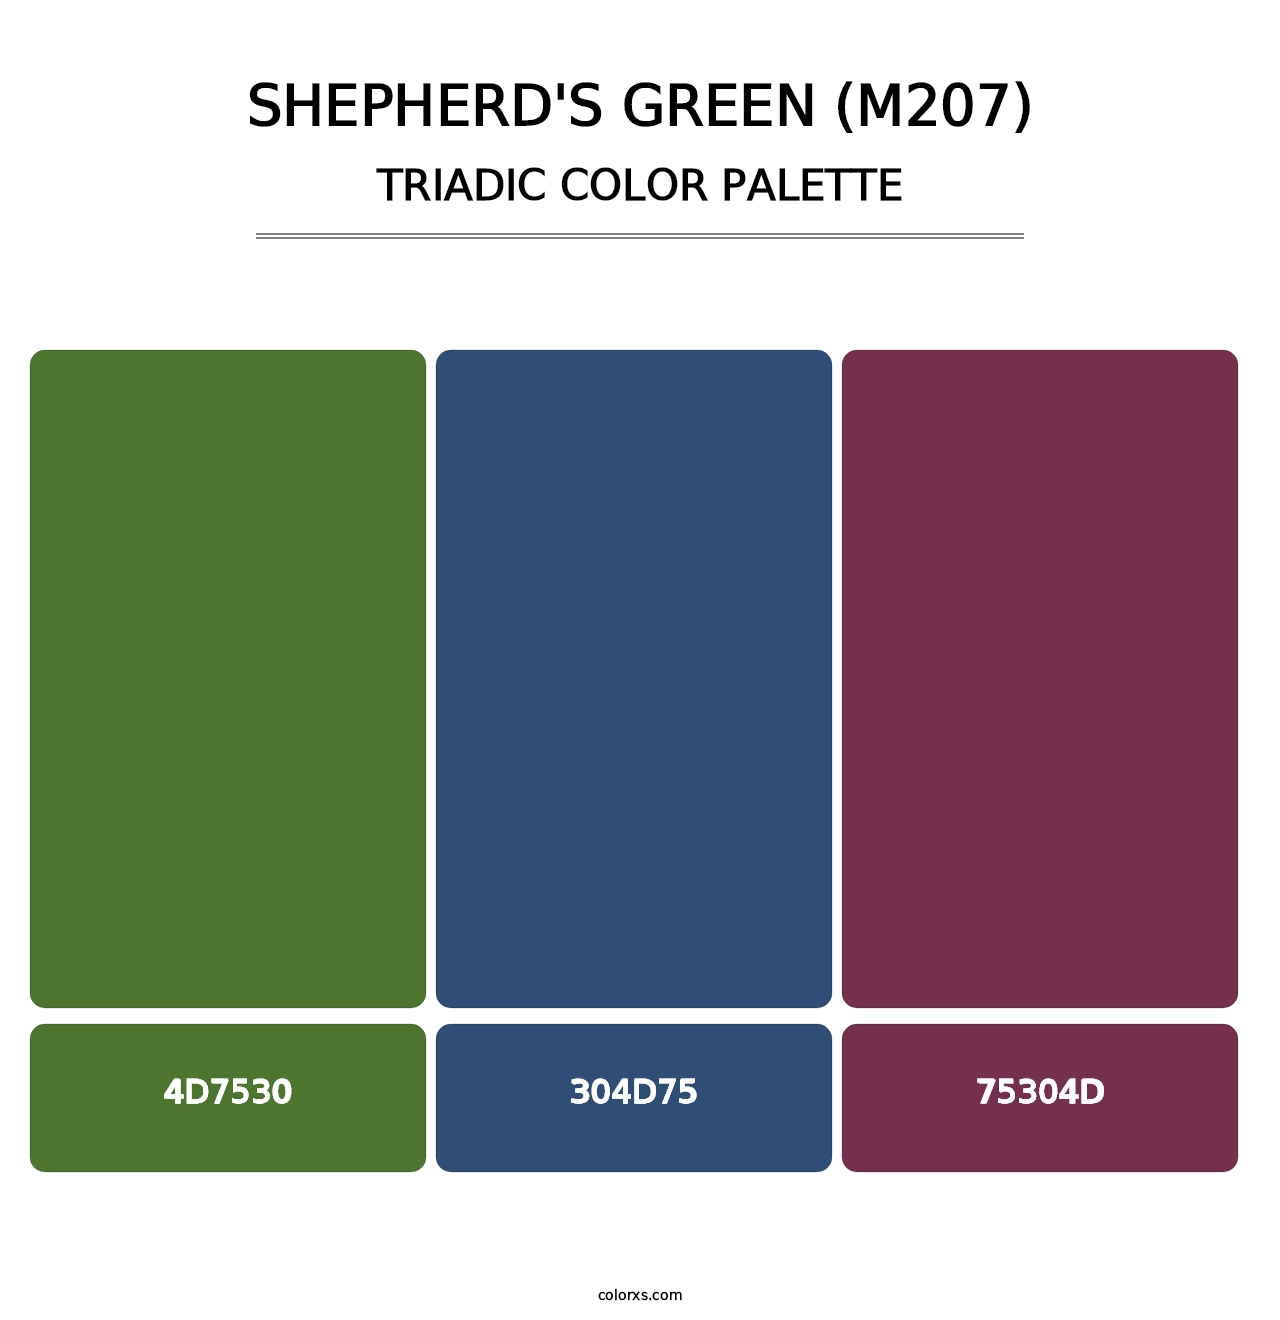 Shepherd's Green (M207) - Triadic Color Palette